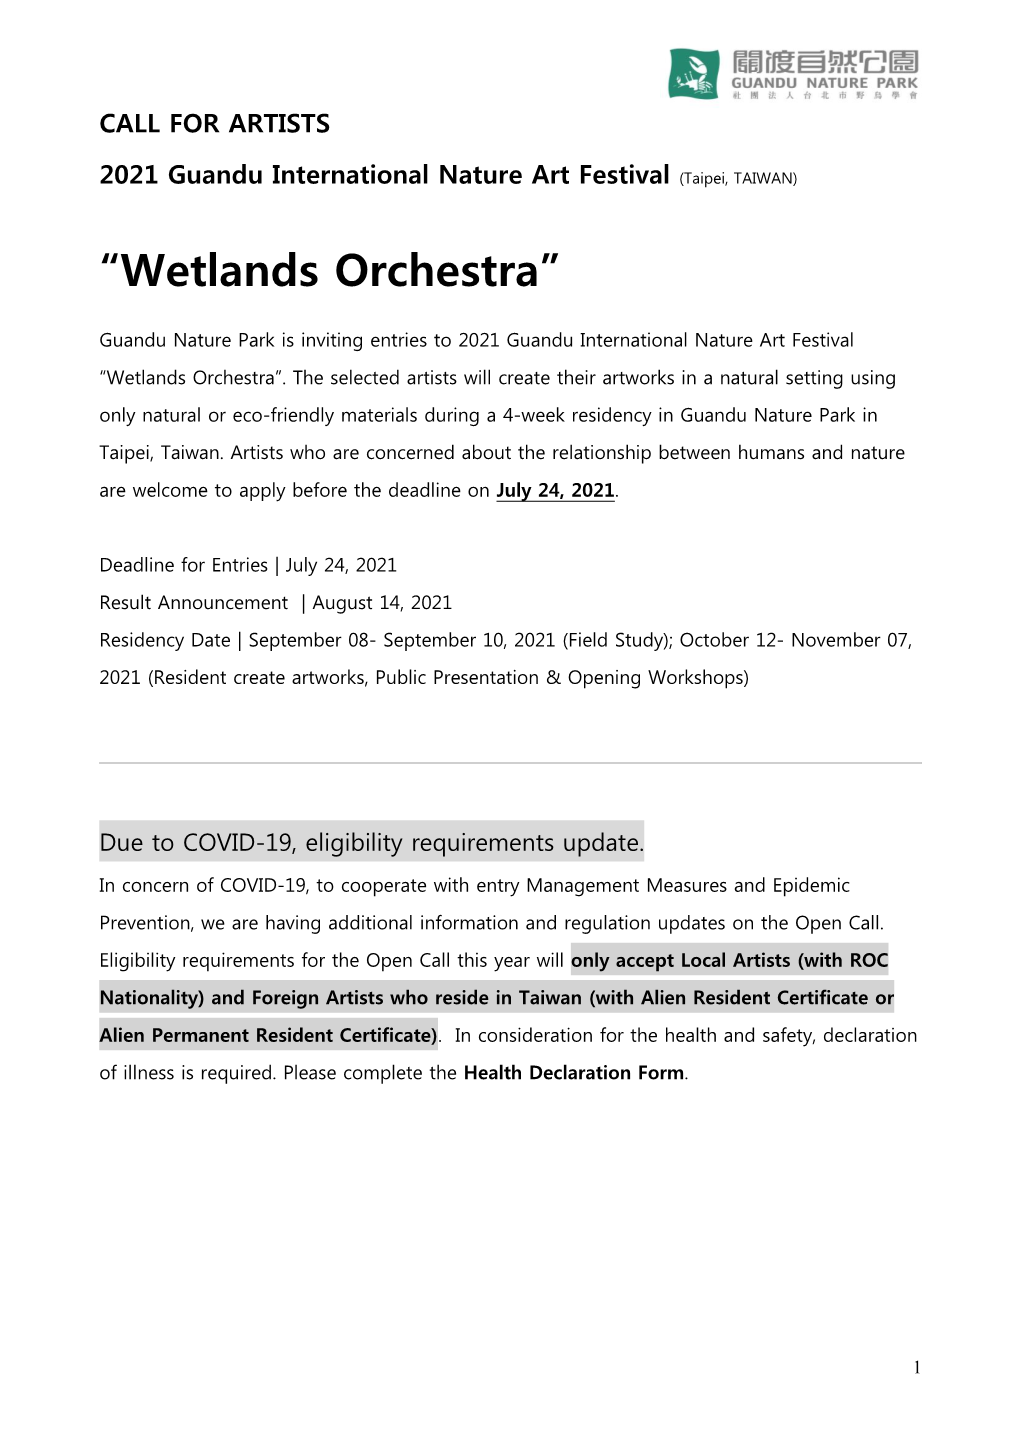 “Wetlands Orchestra”